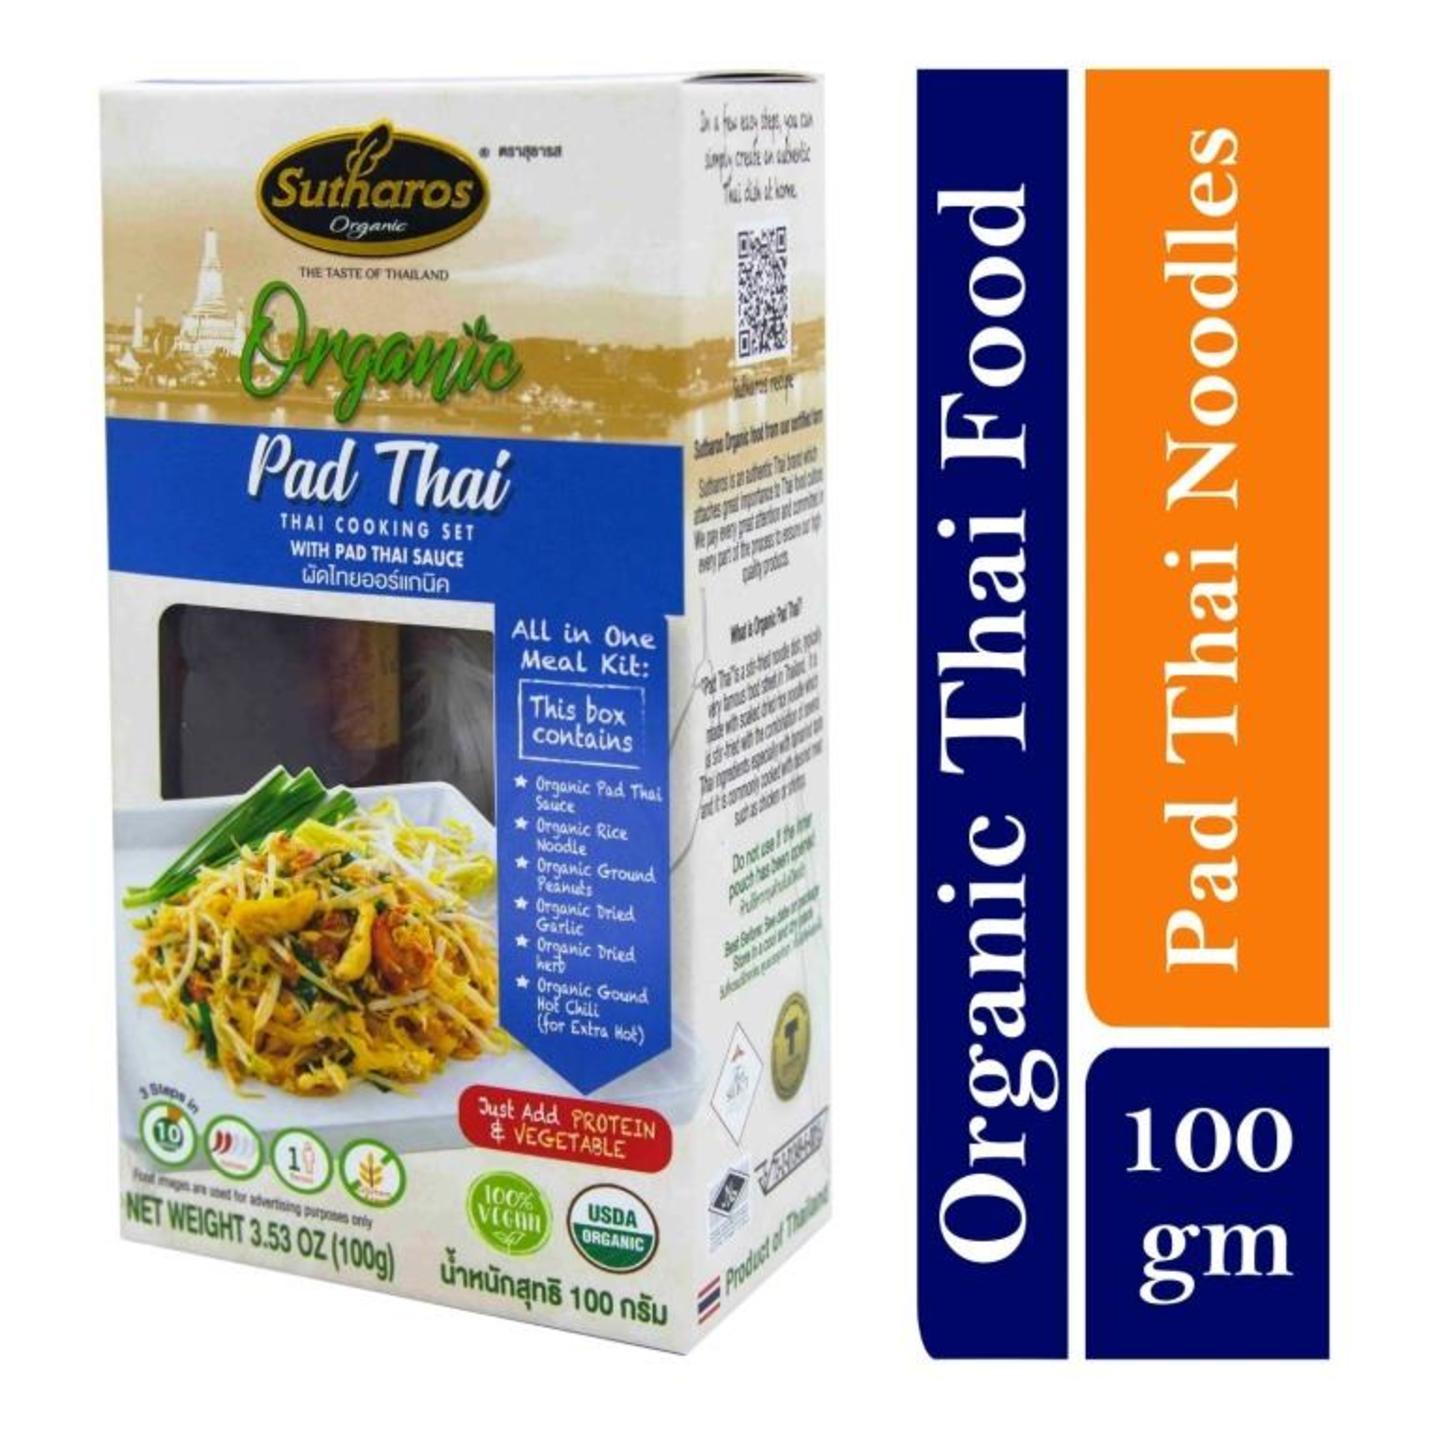 Sutharos Organic Thai Pad Thai Noodles with Pad Thai Sauce 1 x 100gm